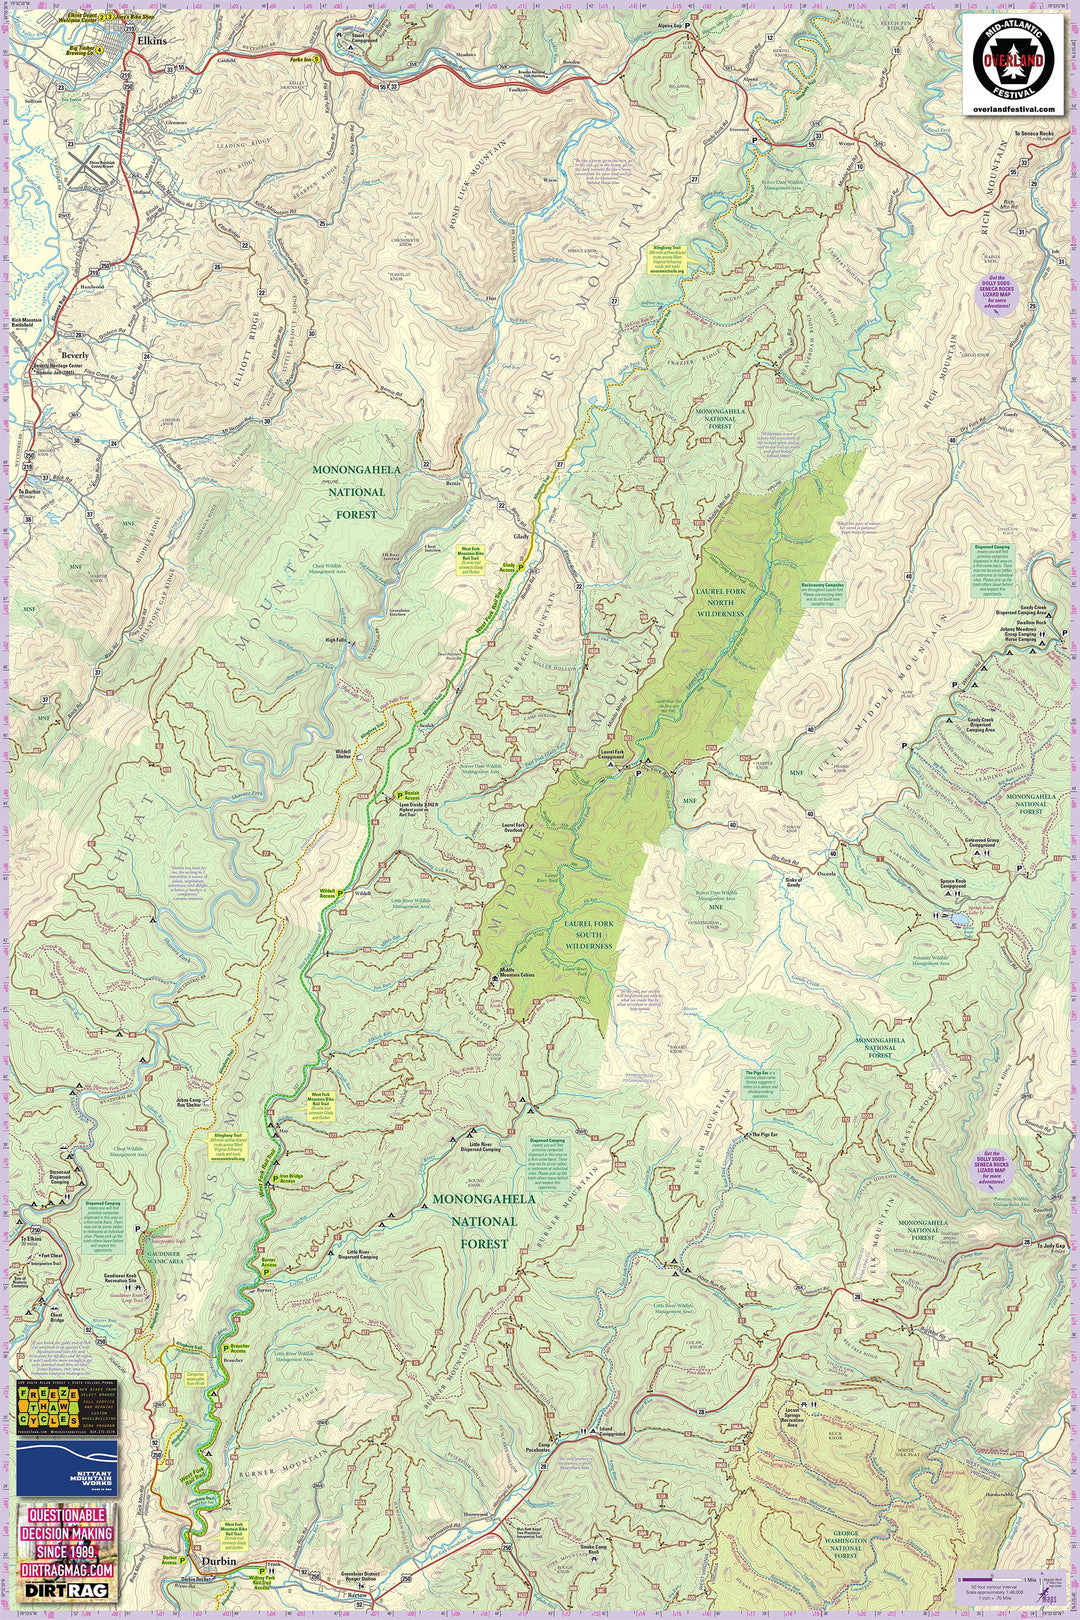 Elkins-Otter Lizard Map, West Virginia